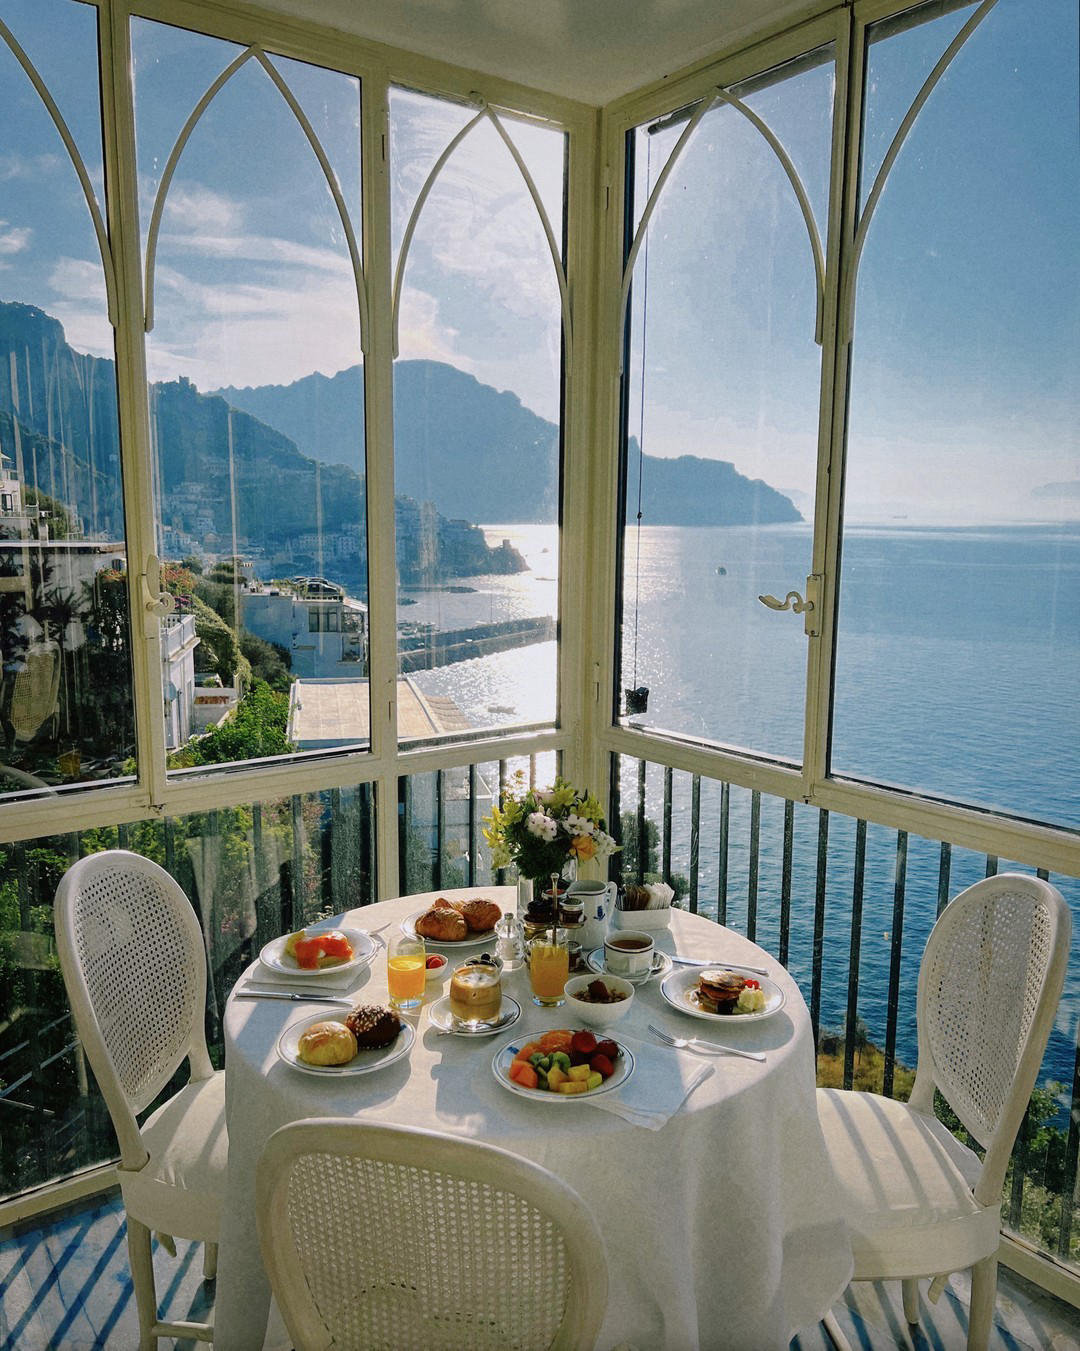 image  1 Hotel Santa Caterina - Breakfast is always a highlight